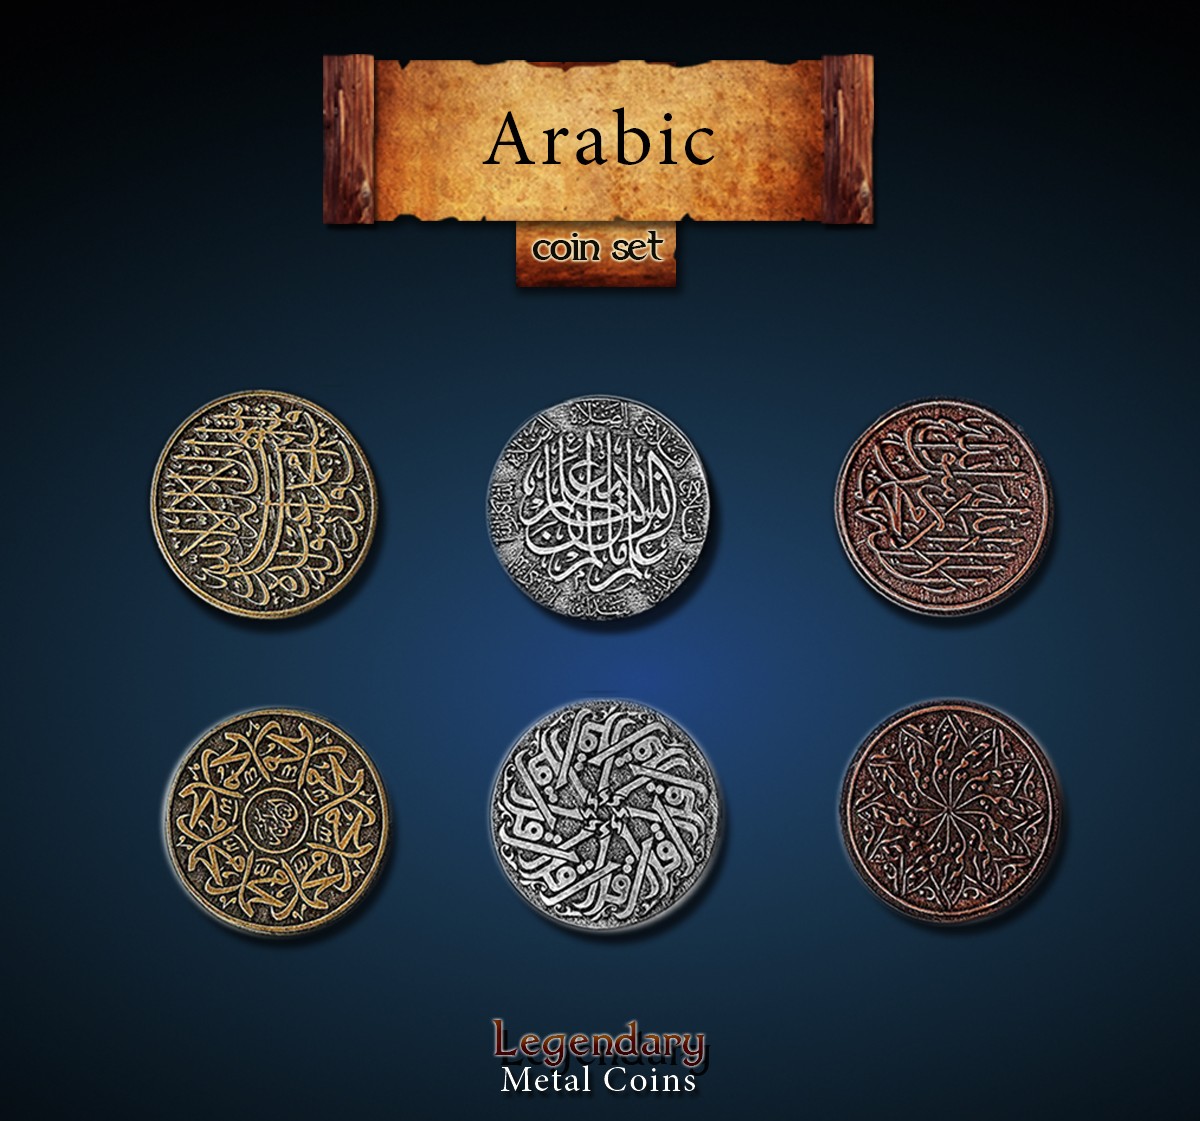 Arabic Coin Set Legendary Metal Coins